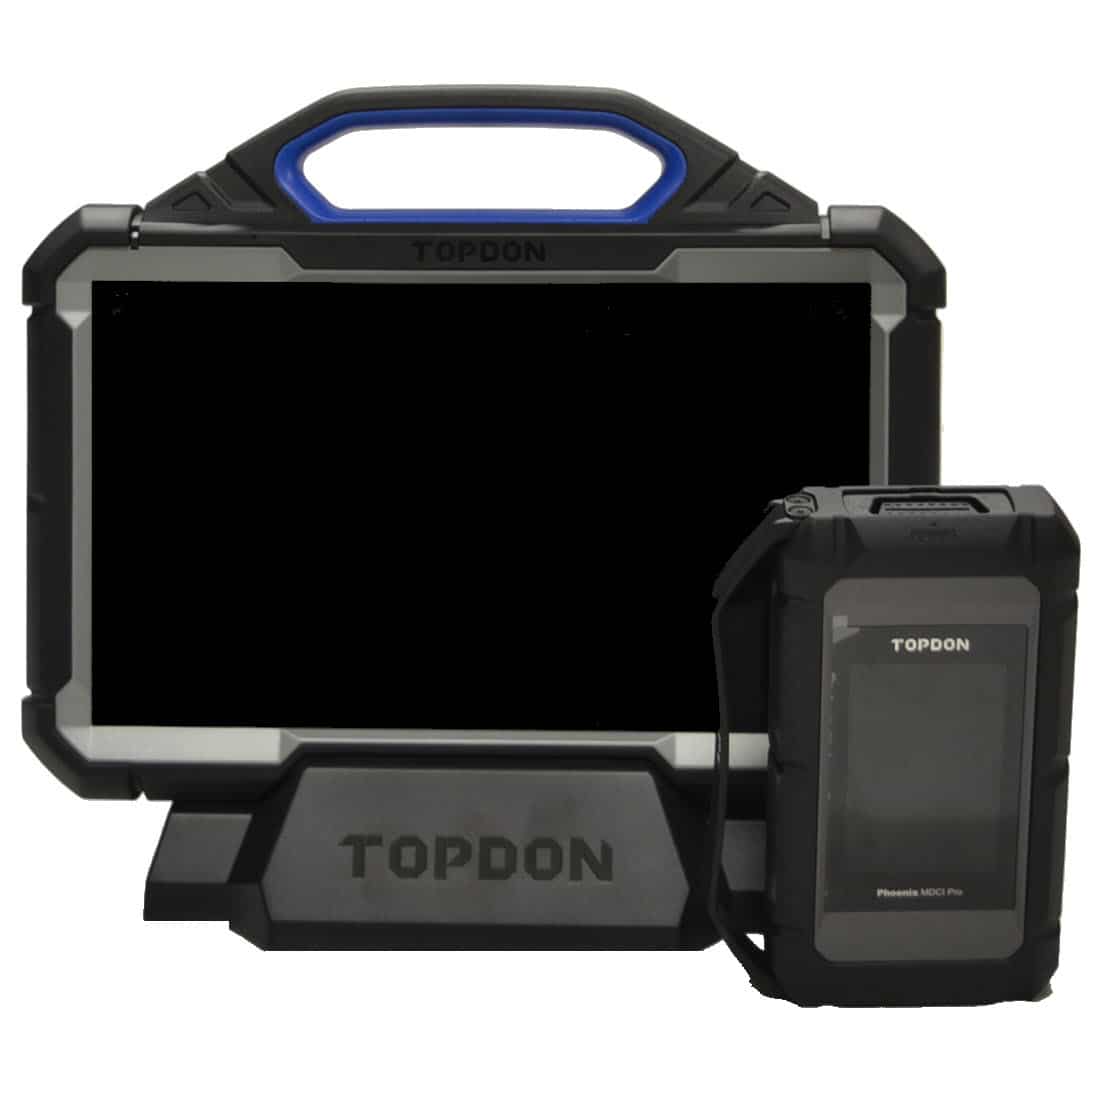 TOPDON Phoenix Lite 2 Car Diagnostic Scan Tool Support Online Coding Active  Test